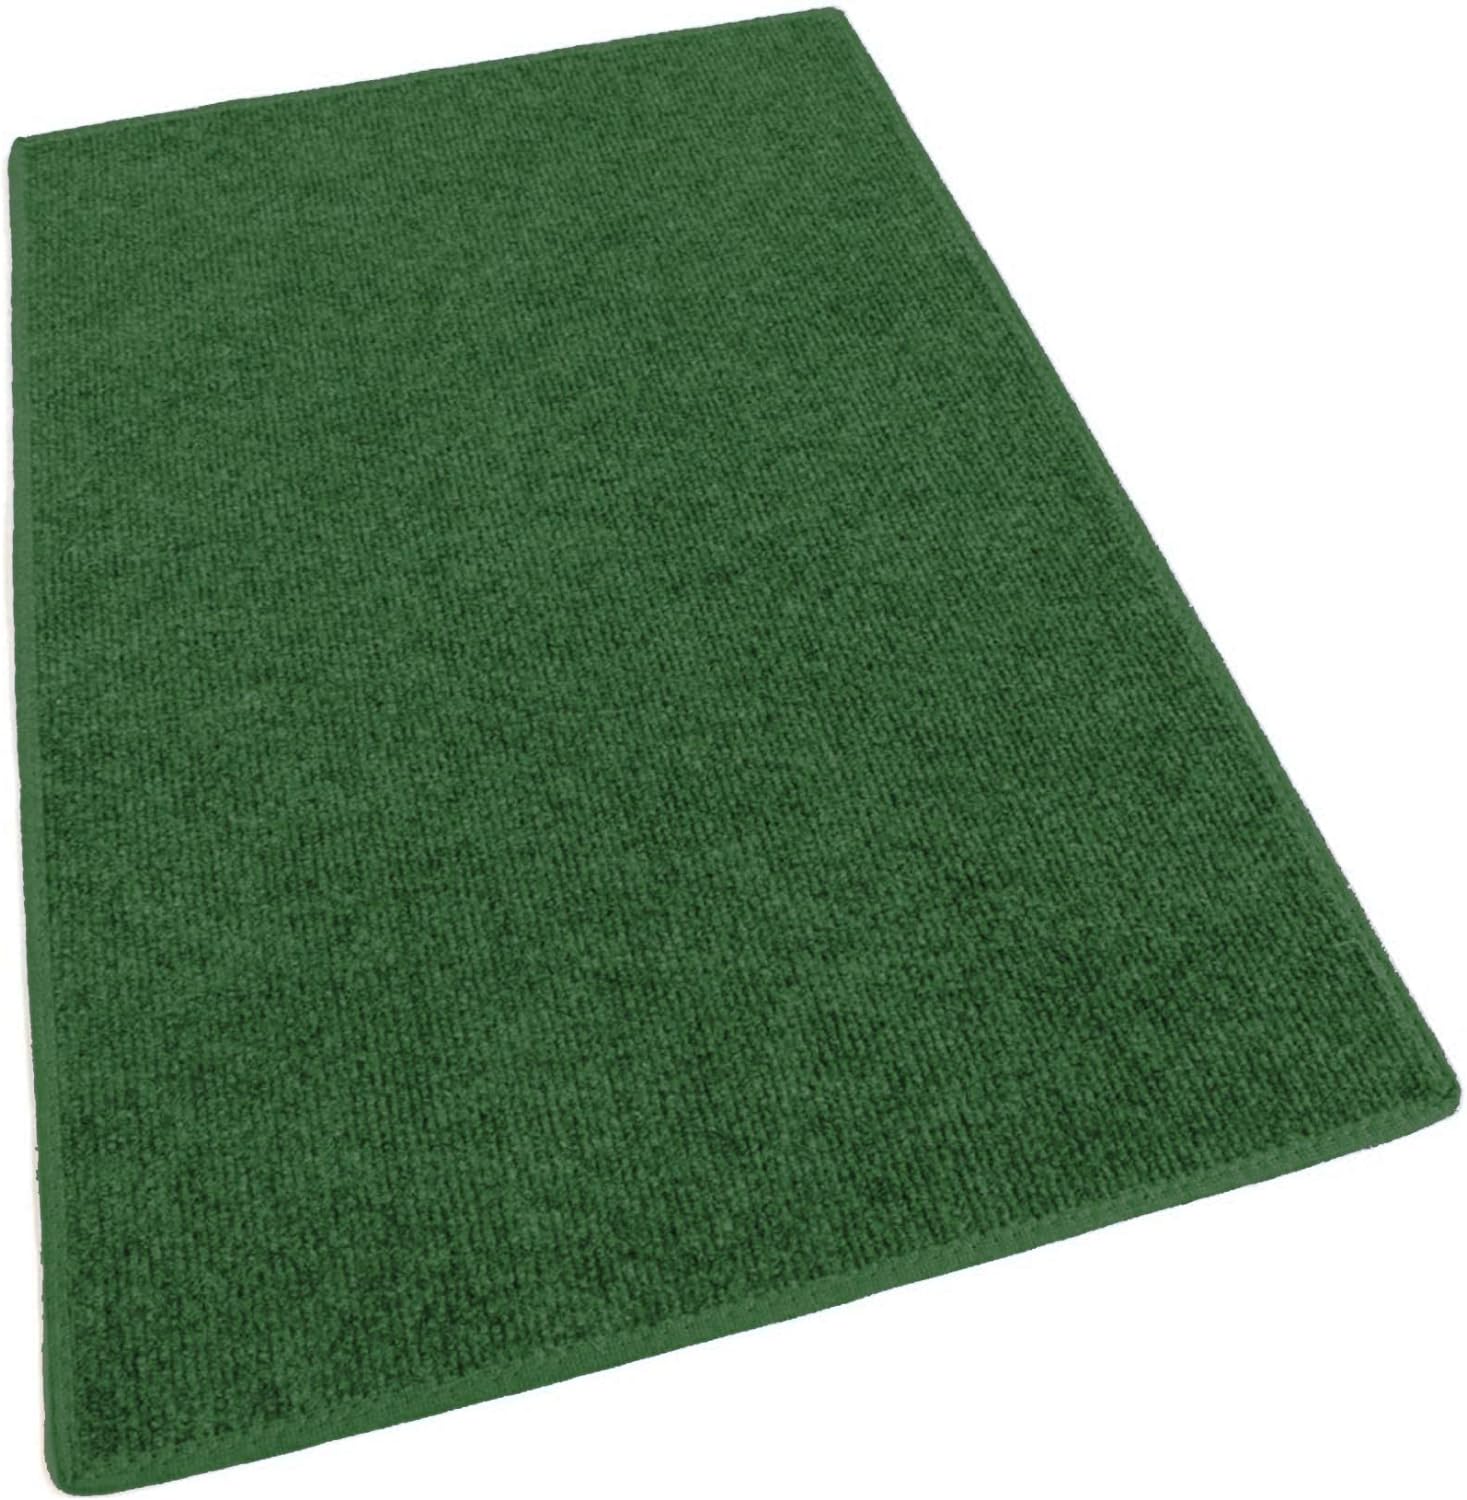 Koeckritz Rugs Emerald Green Indoor/Outdoor Carpet Patio & Pool Area Rugs Runners and Doormats - Easy Maintenance - Just Hose Off & Dry! 